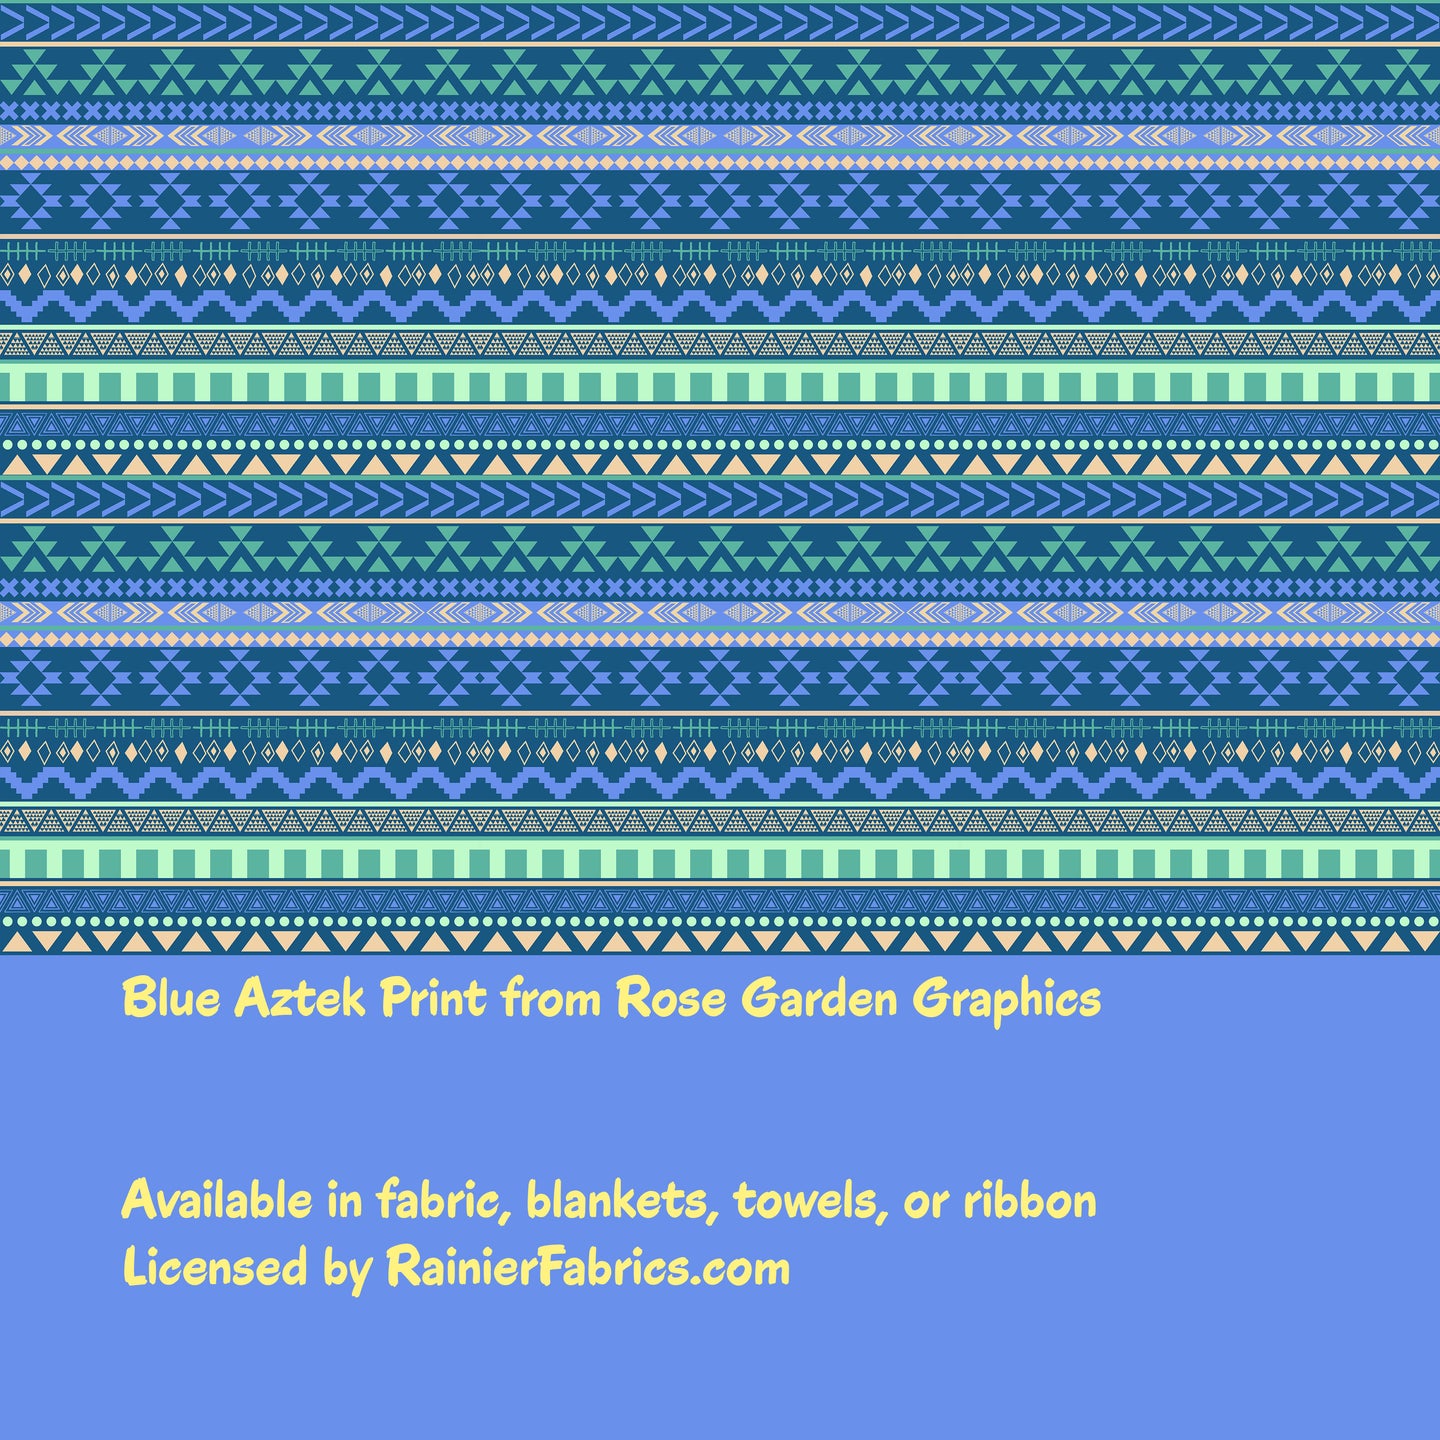 Blue Aztek Stripes designed by Rose Garden Graphics - 2-5 day turnaround - Order by 1/2 yard; Description of bases below